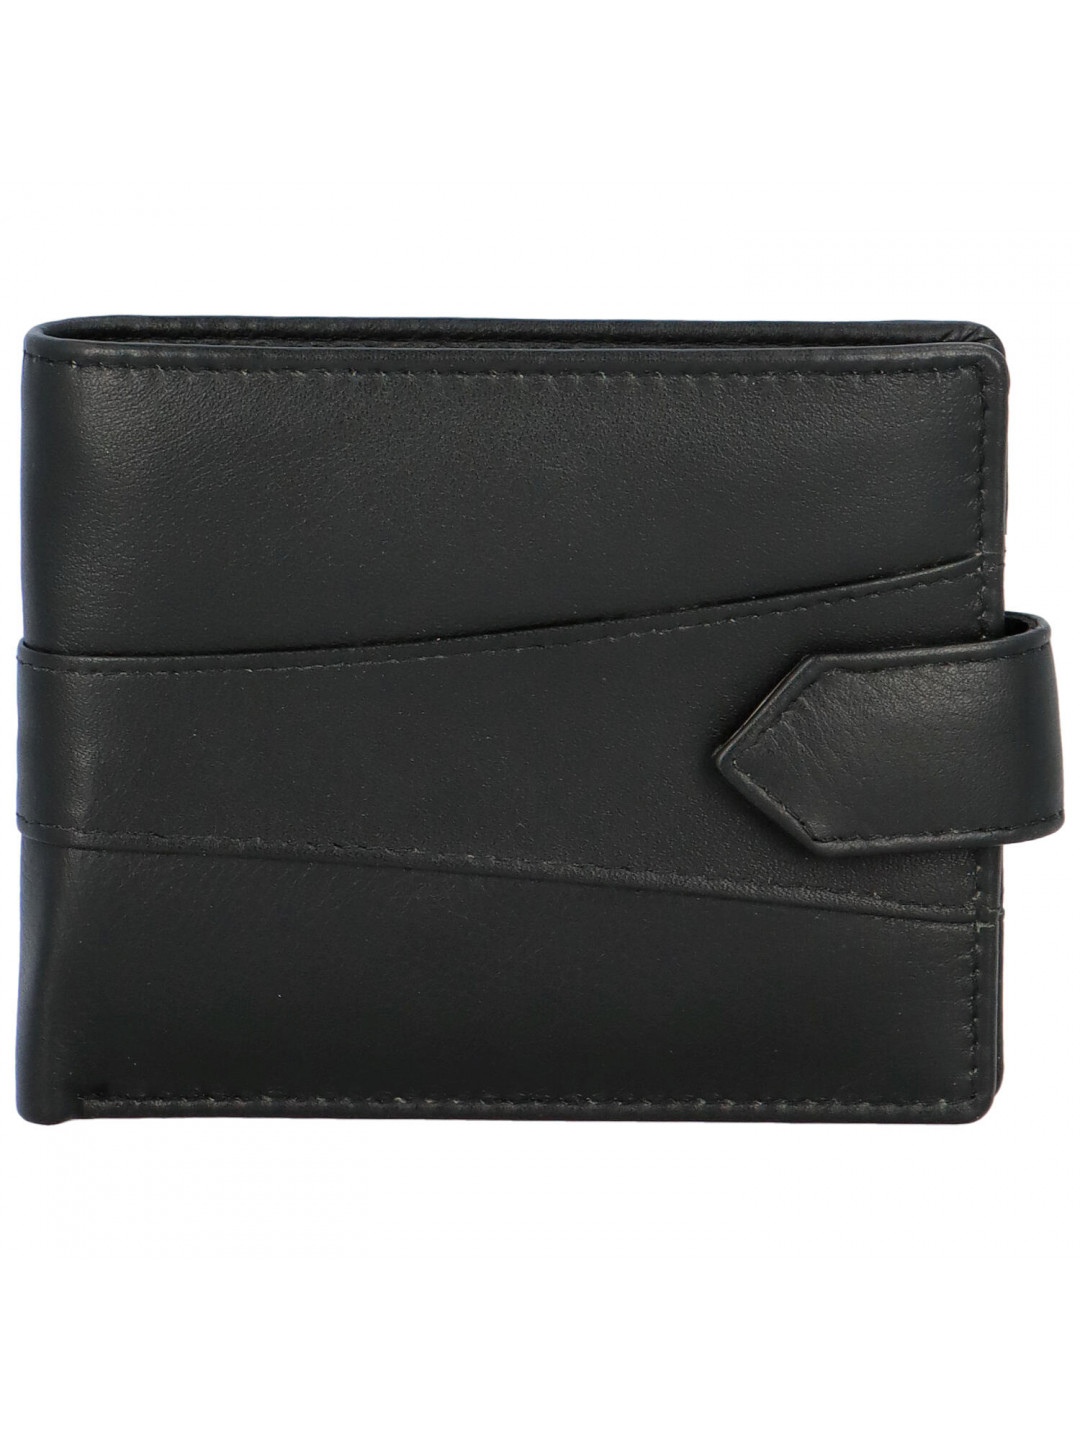 Pánská kožená peněženka černá hladká – Tomas Inrogo